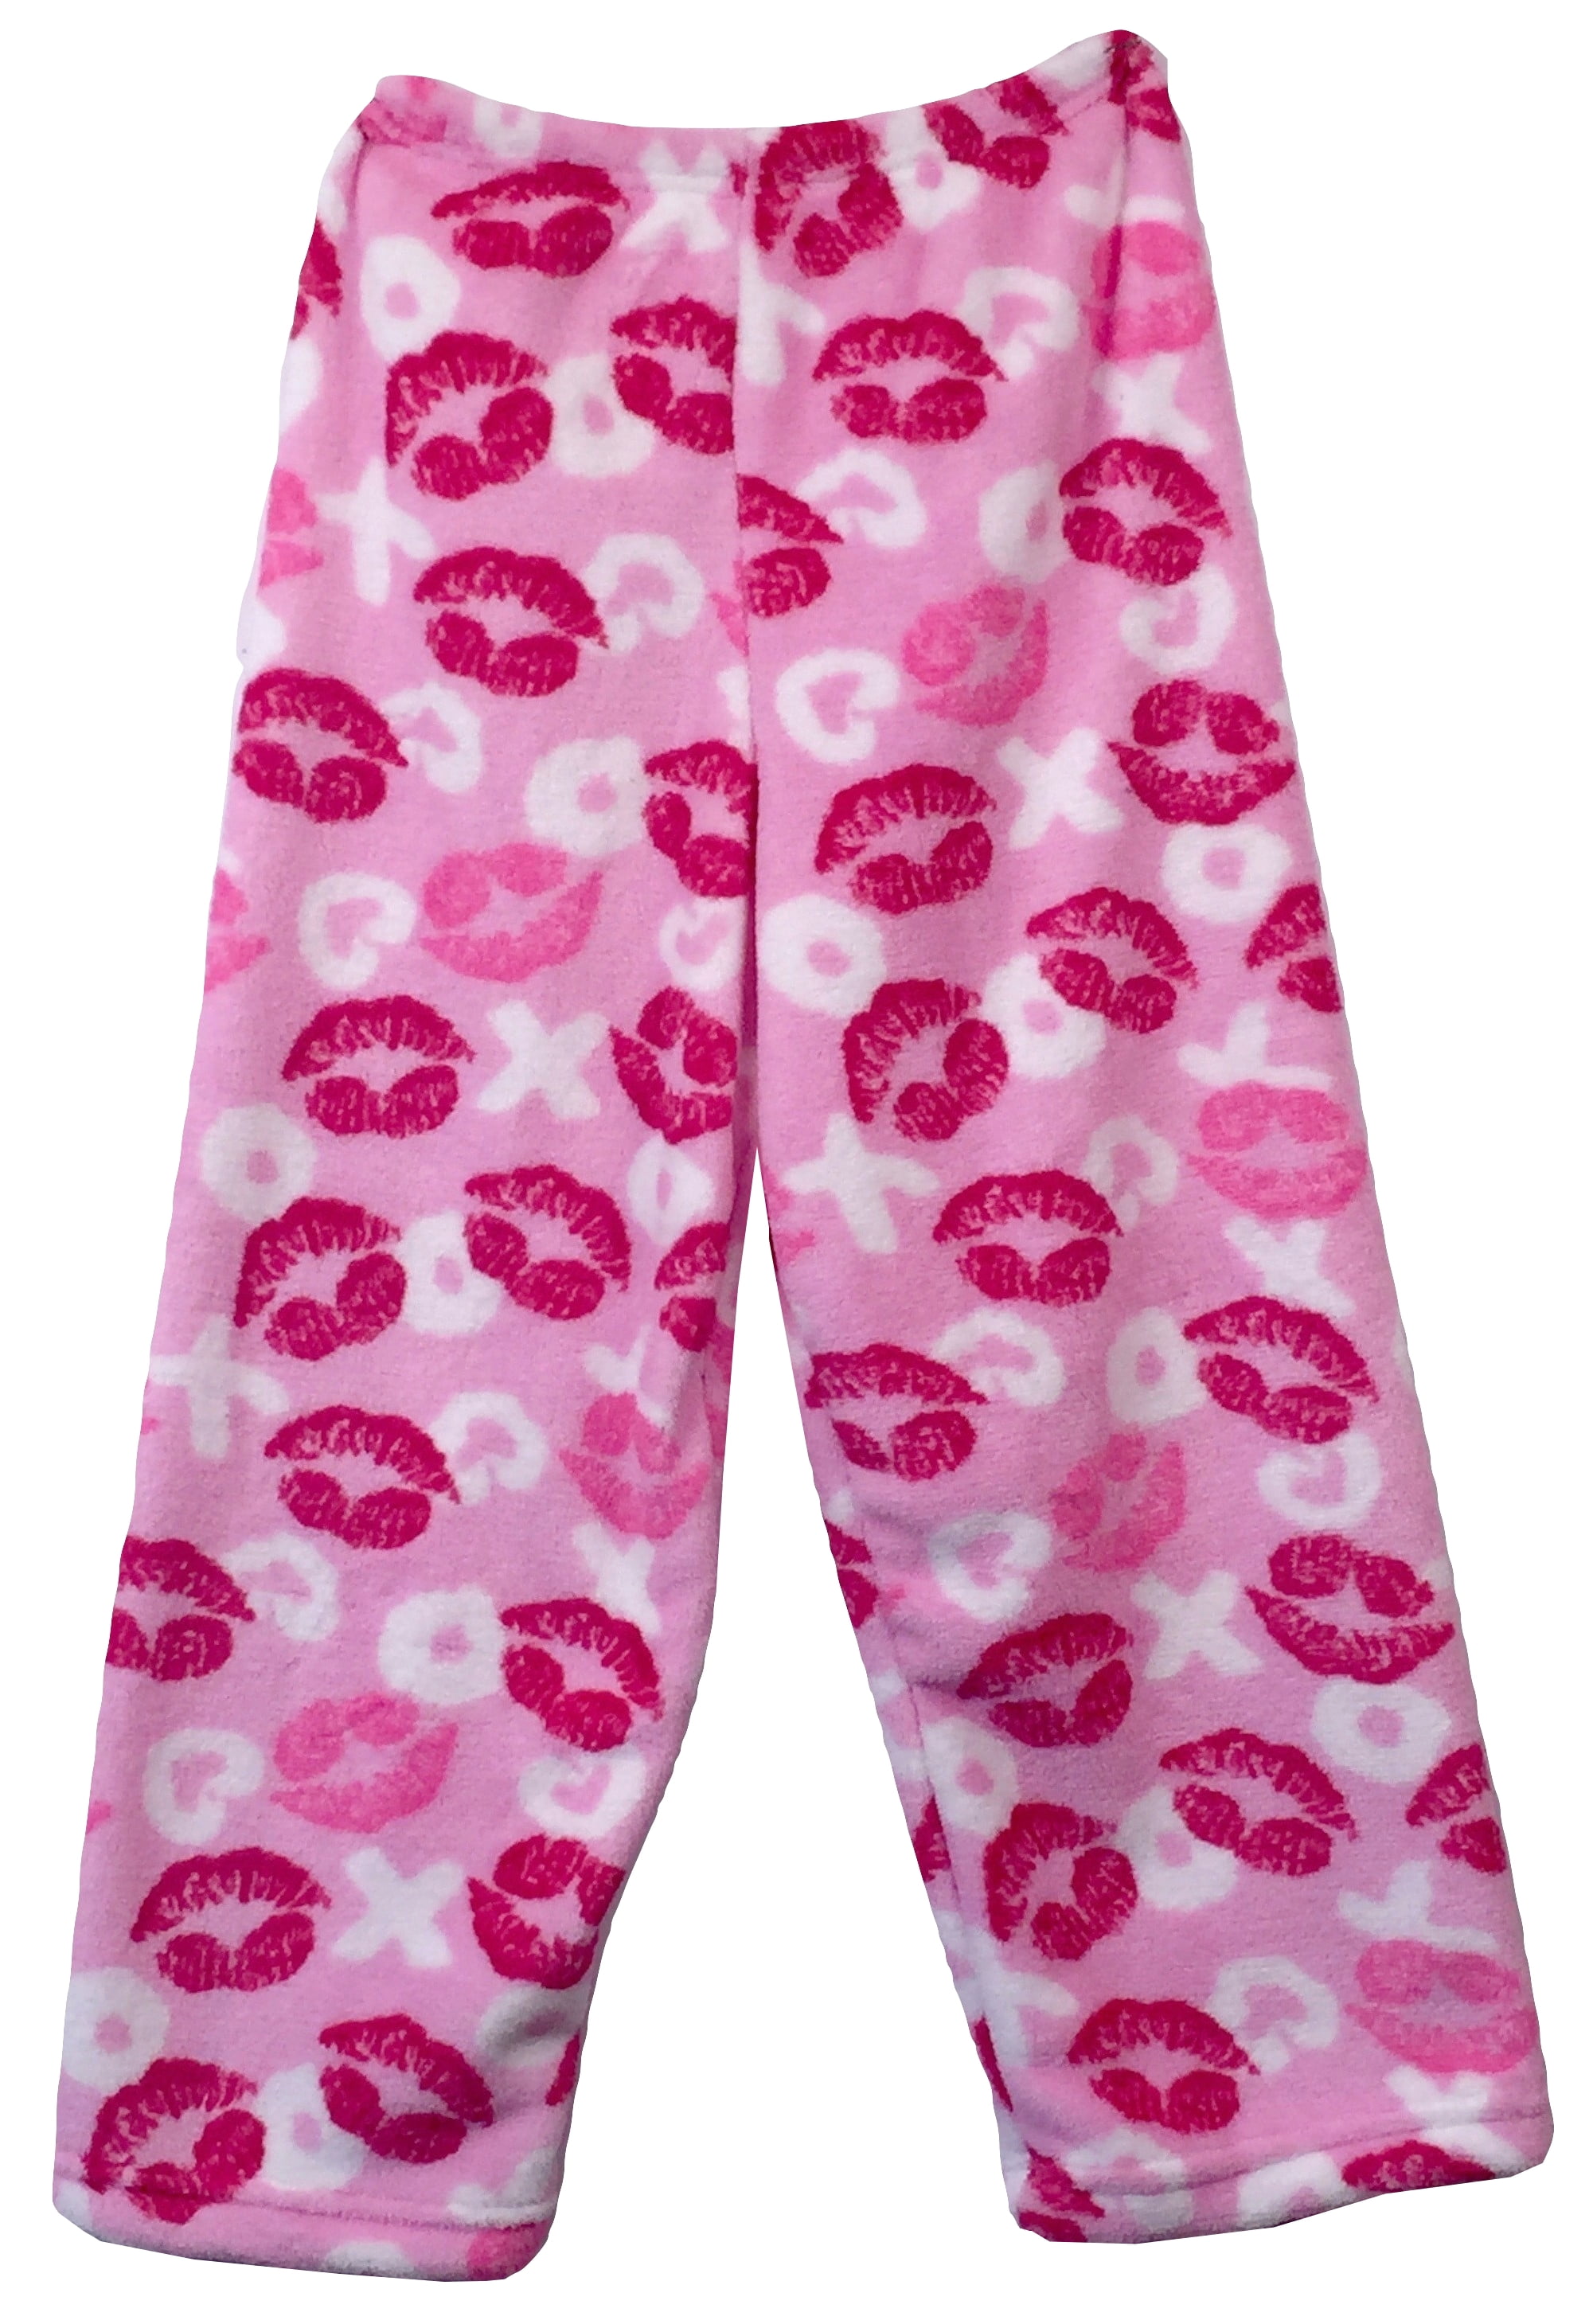 Made with Love and Kisses Boys Fuzzy Plush Pajama//Loungewear Pants